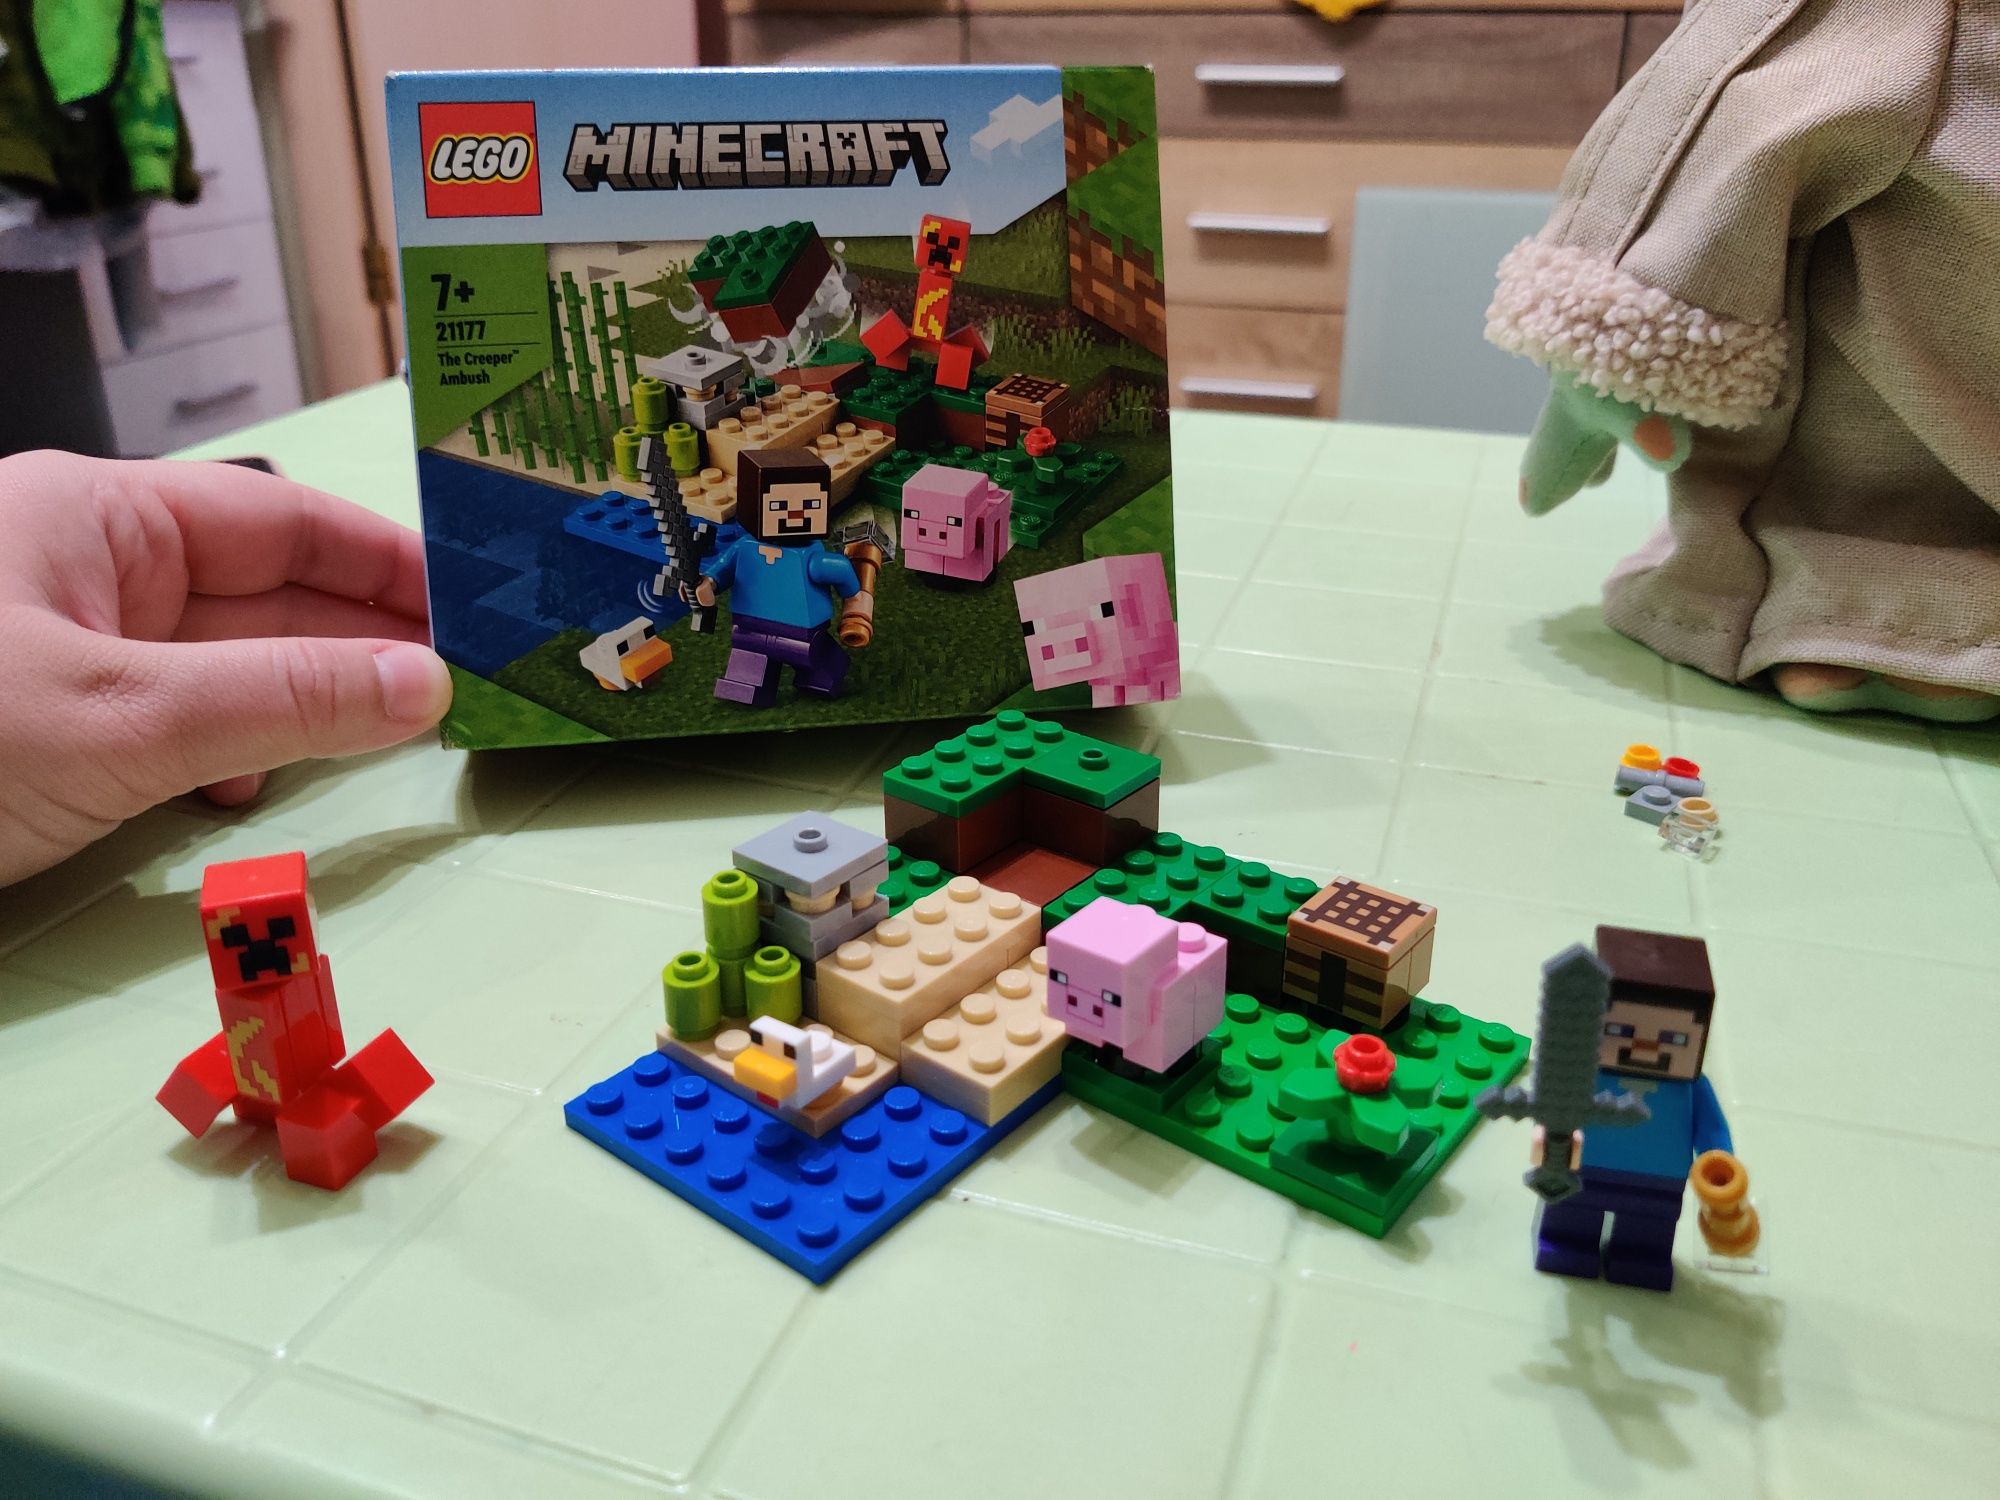 Lego Minecraft 21177